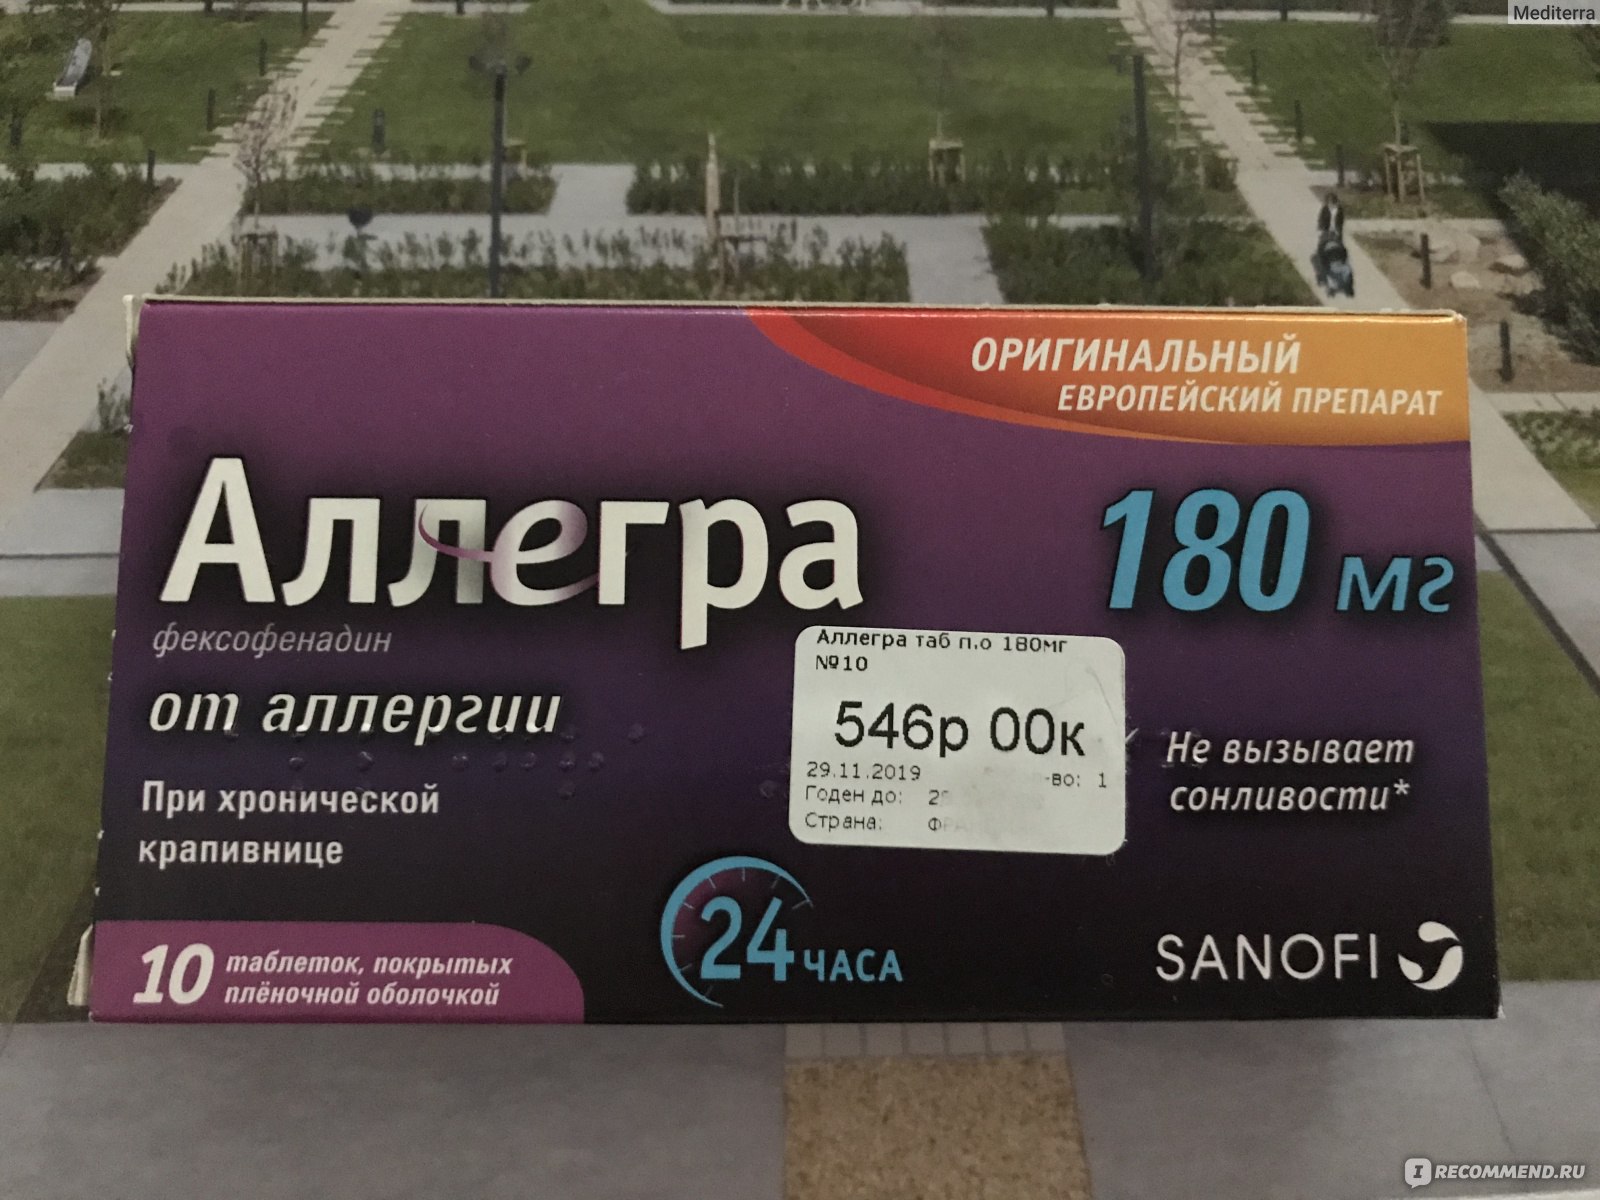 Таблетки Sanofi aventis Аллегра фексофенадин 180 мг - «⚡️ Лечение .